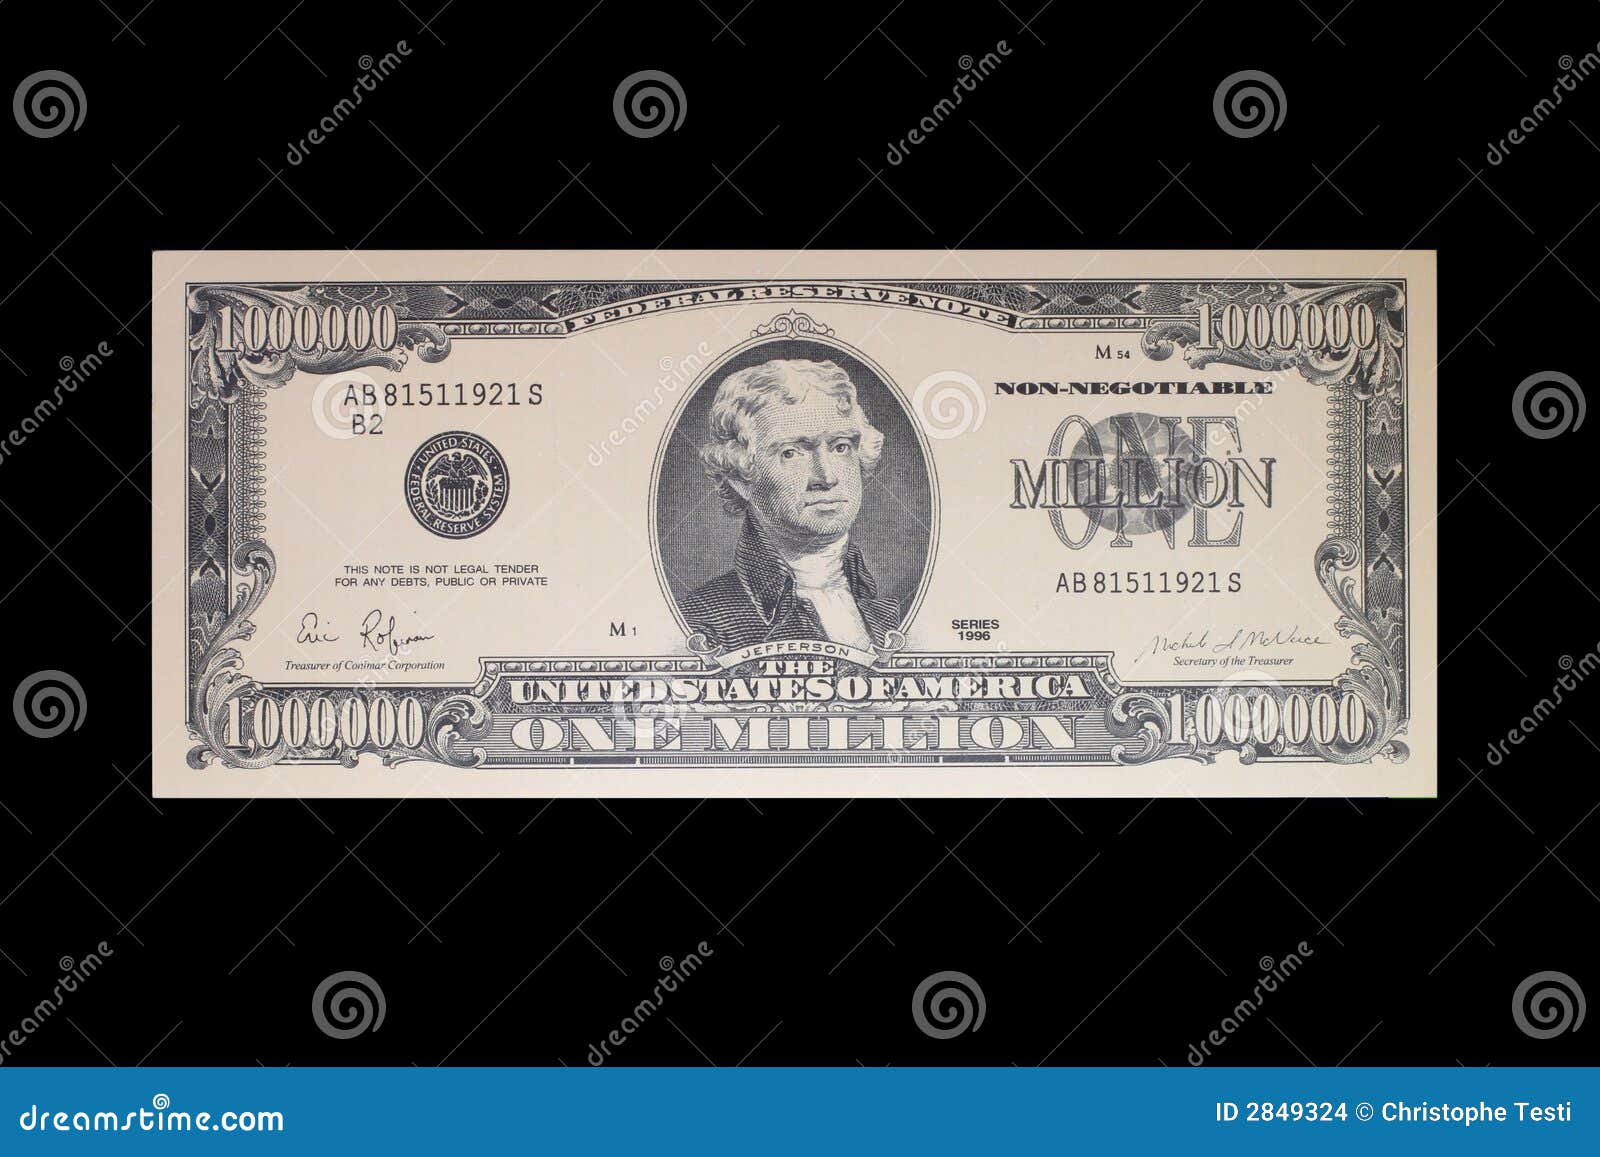 1 million dollar bank note